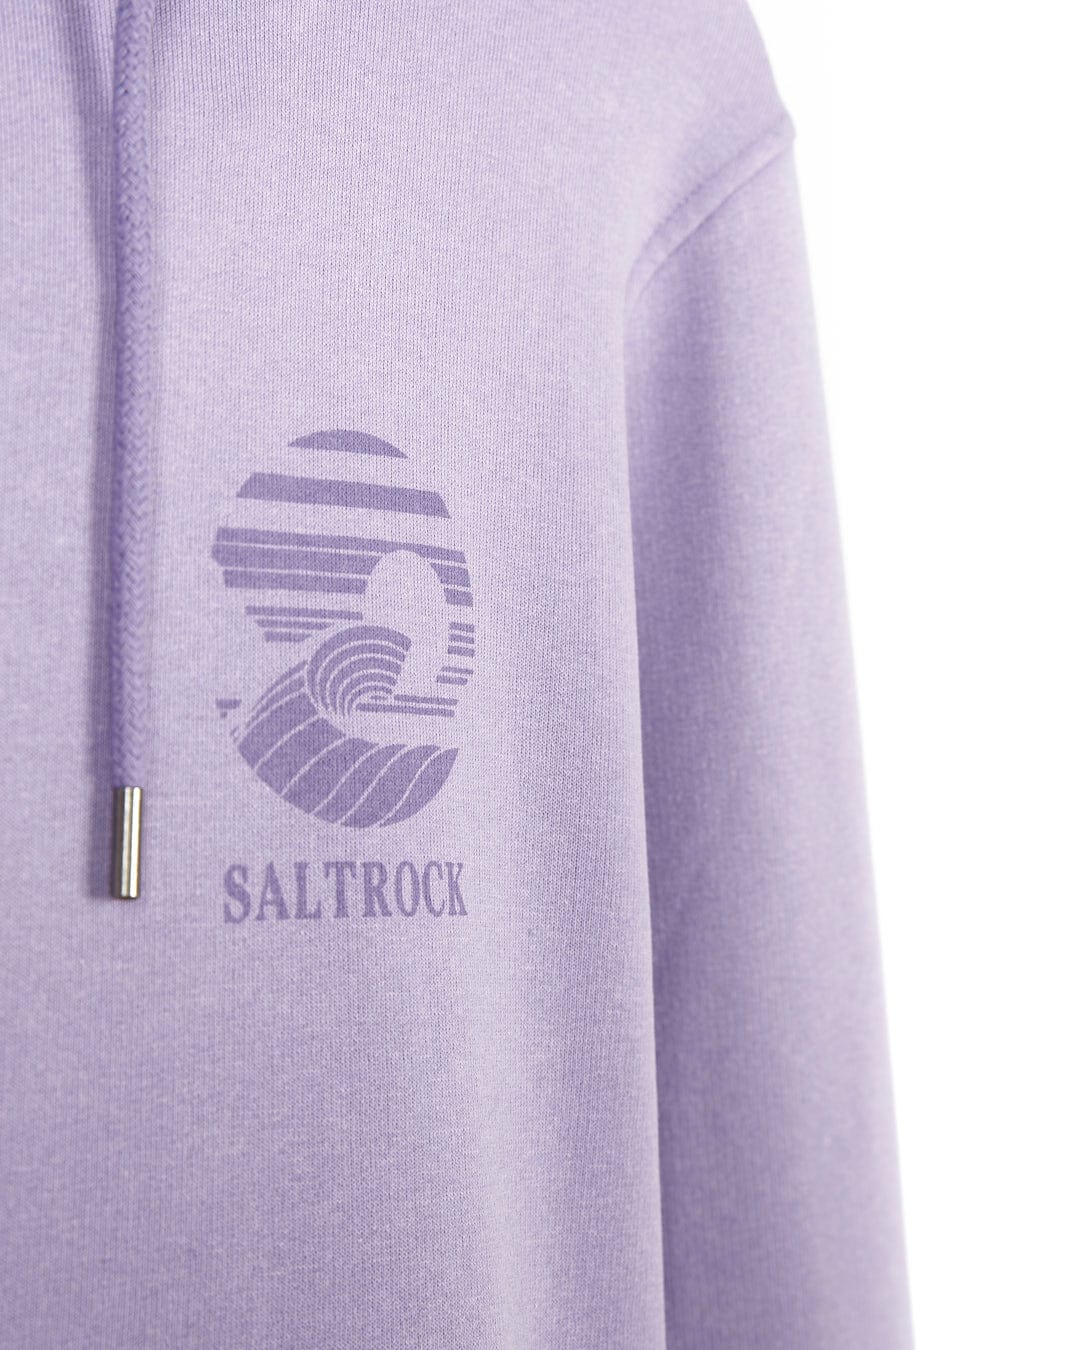 A Saltrock Atlantic - Mens Pop Hoodie - Purple with the word Saltrock on it.